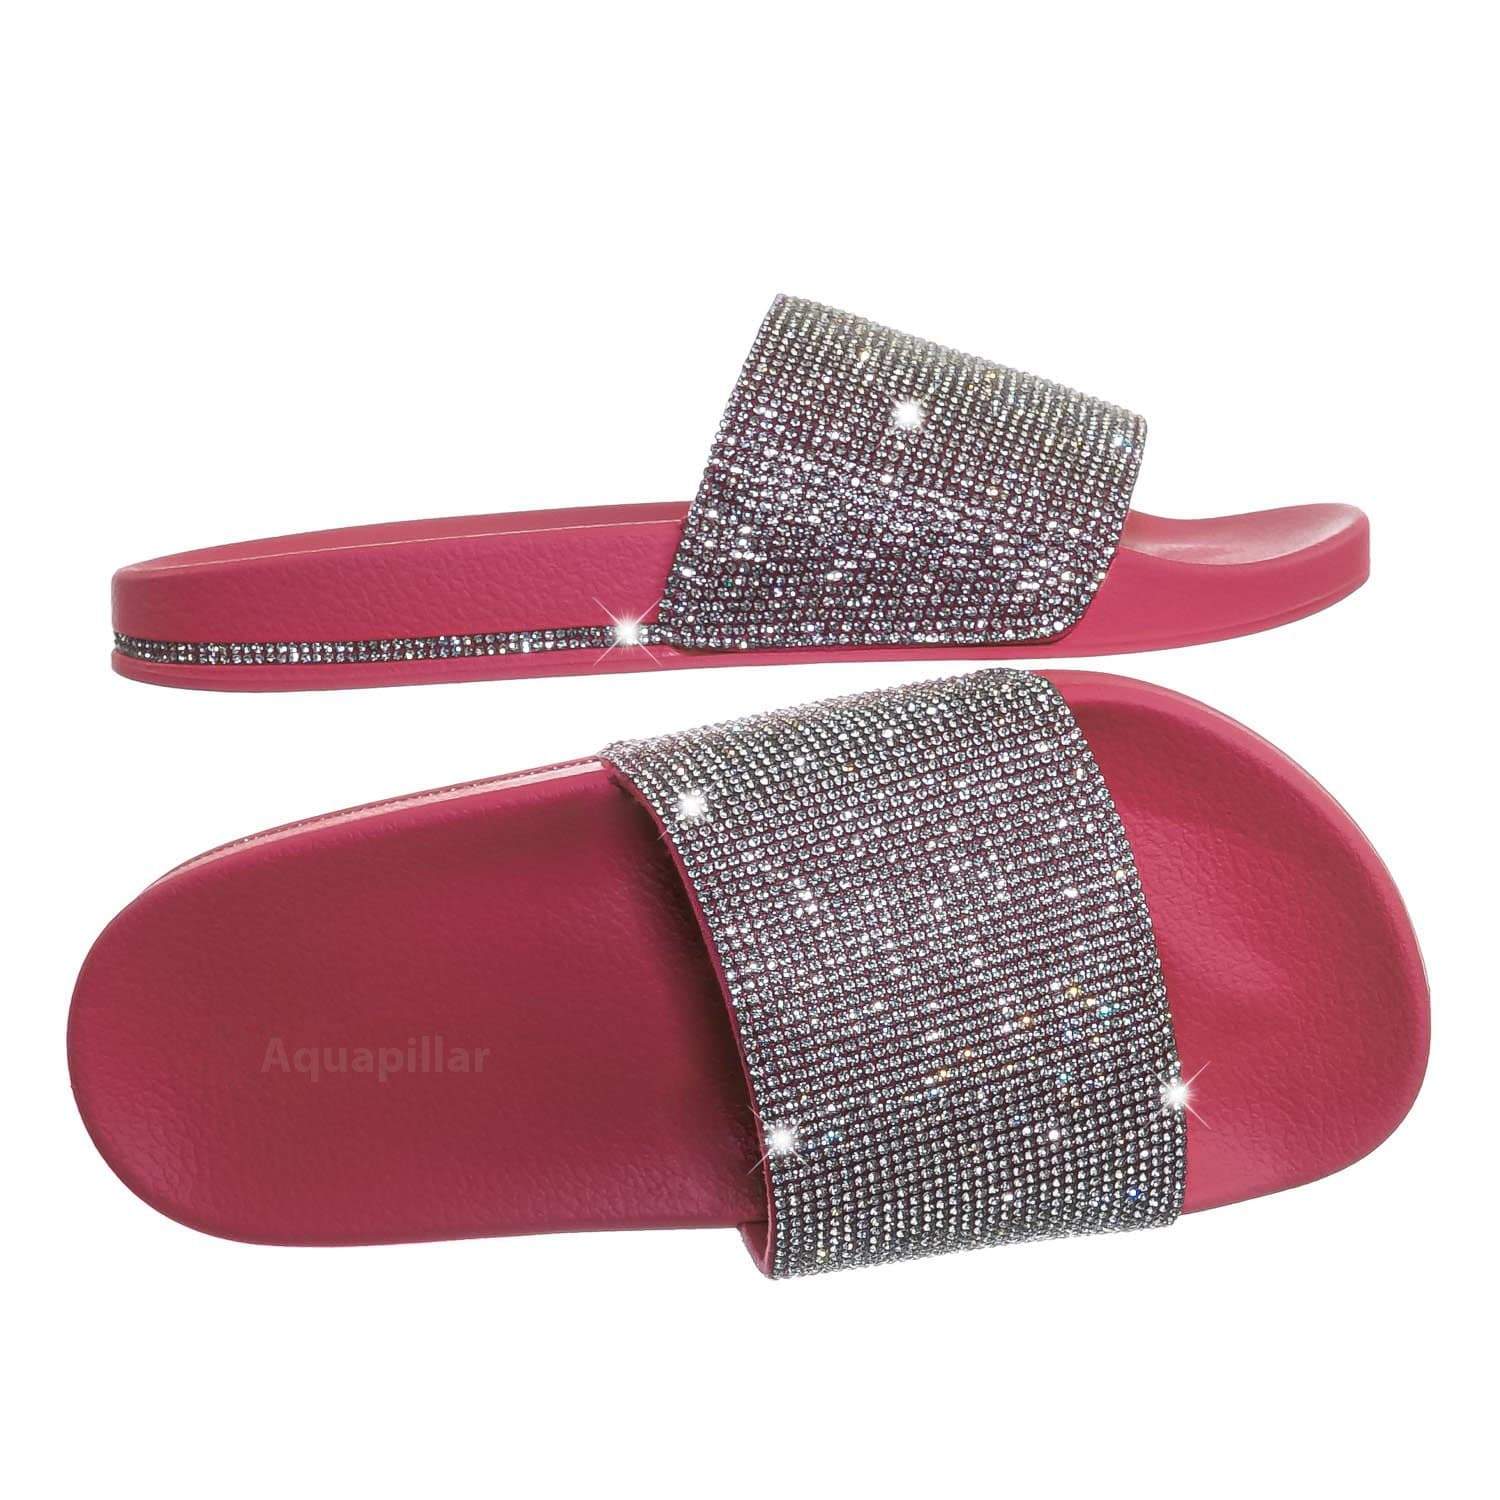 Neon Pink / Marty 01NPnkJr Rhinestone Crystal Footbed Slipper - Women Molded Comfort Flat Sandal